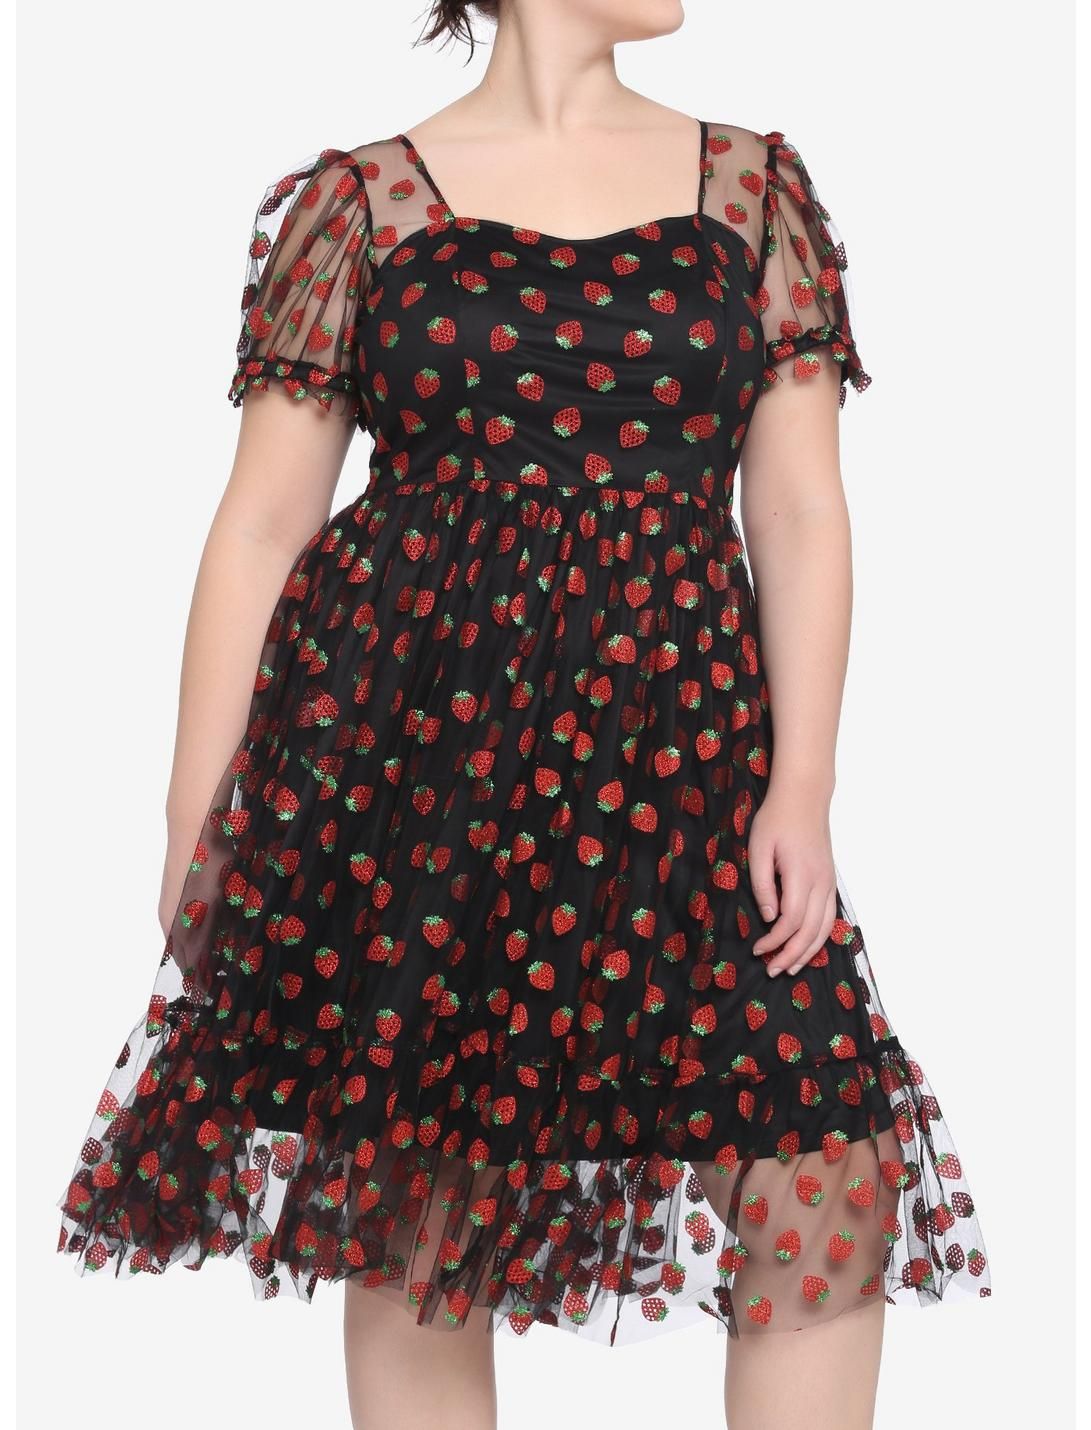 Strawberry Glitter Mesh Dress Plus Size | Hot Topic